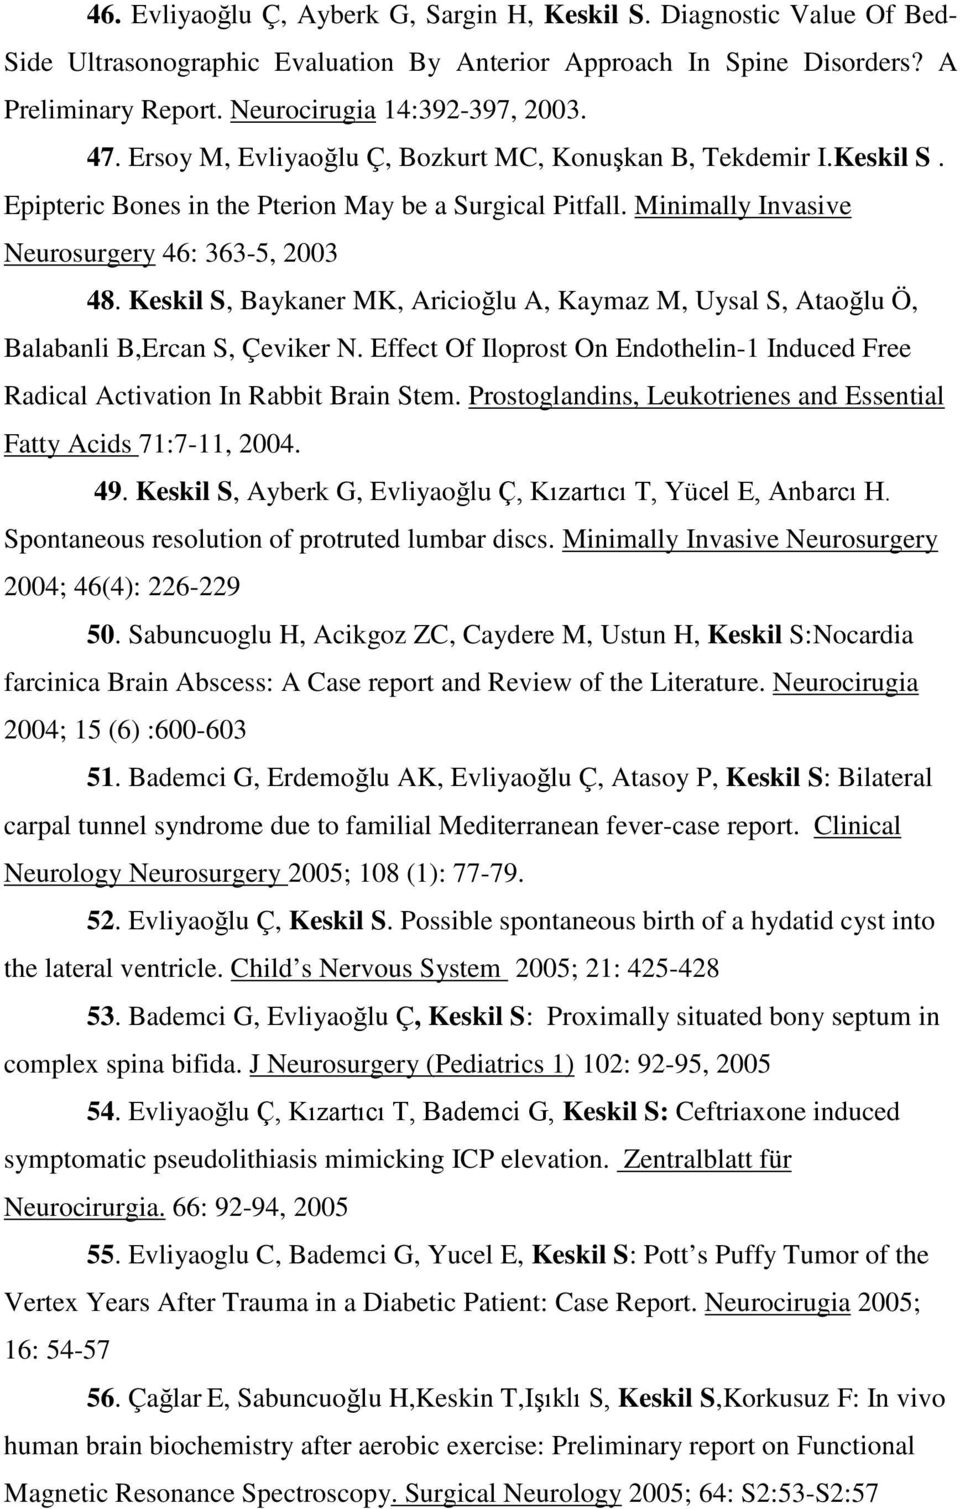 Keskil S, Baykaner MK, Aricioğlu A, Kaymaz M, Uysal S, Ataoğlu Ö, Balabanli B,Ercan S, Çeviker N. Effect Of Iloprost On Endothelin-1 Induced Free Radical Activation In Rabbit Brain Stem.